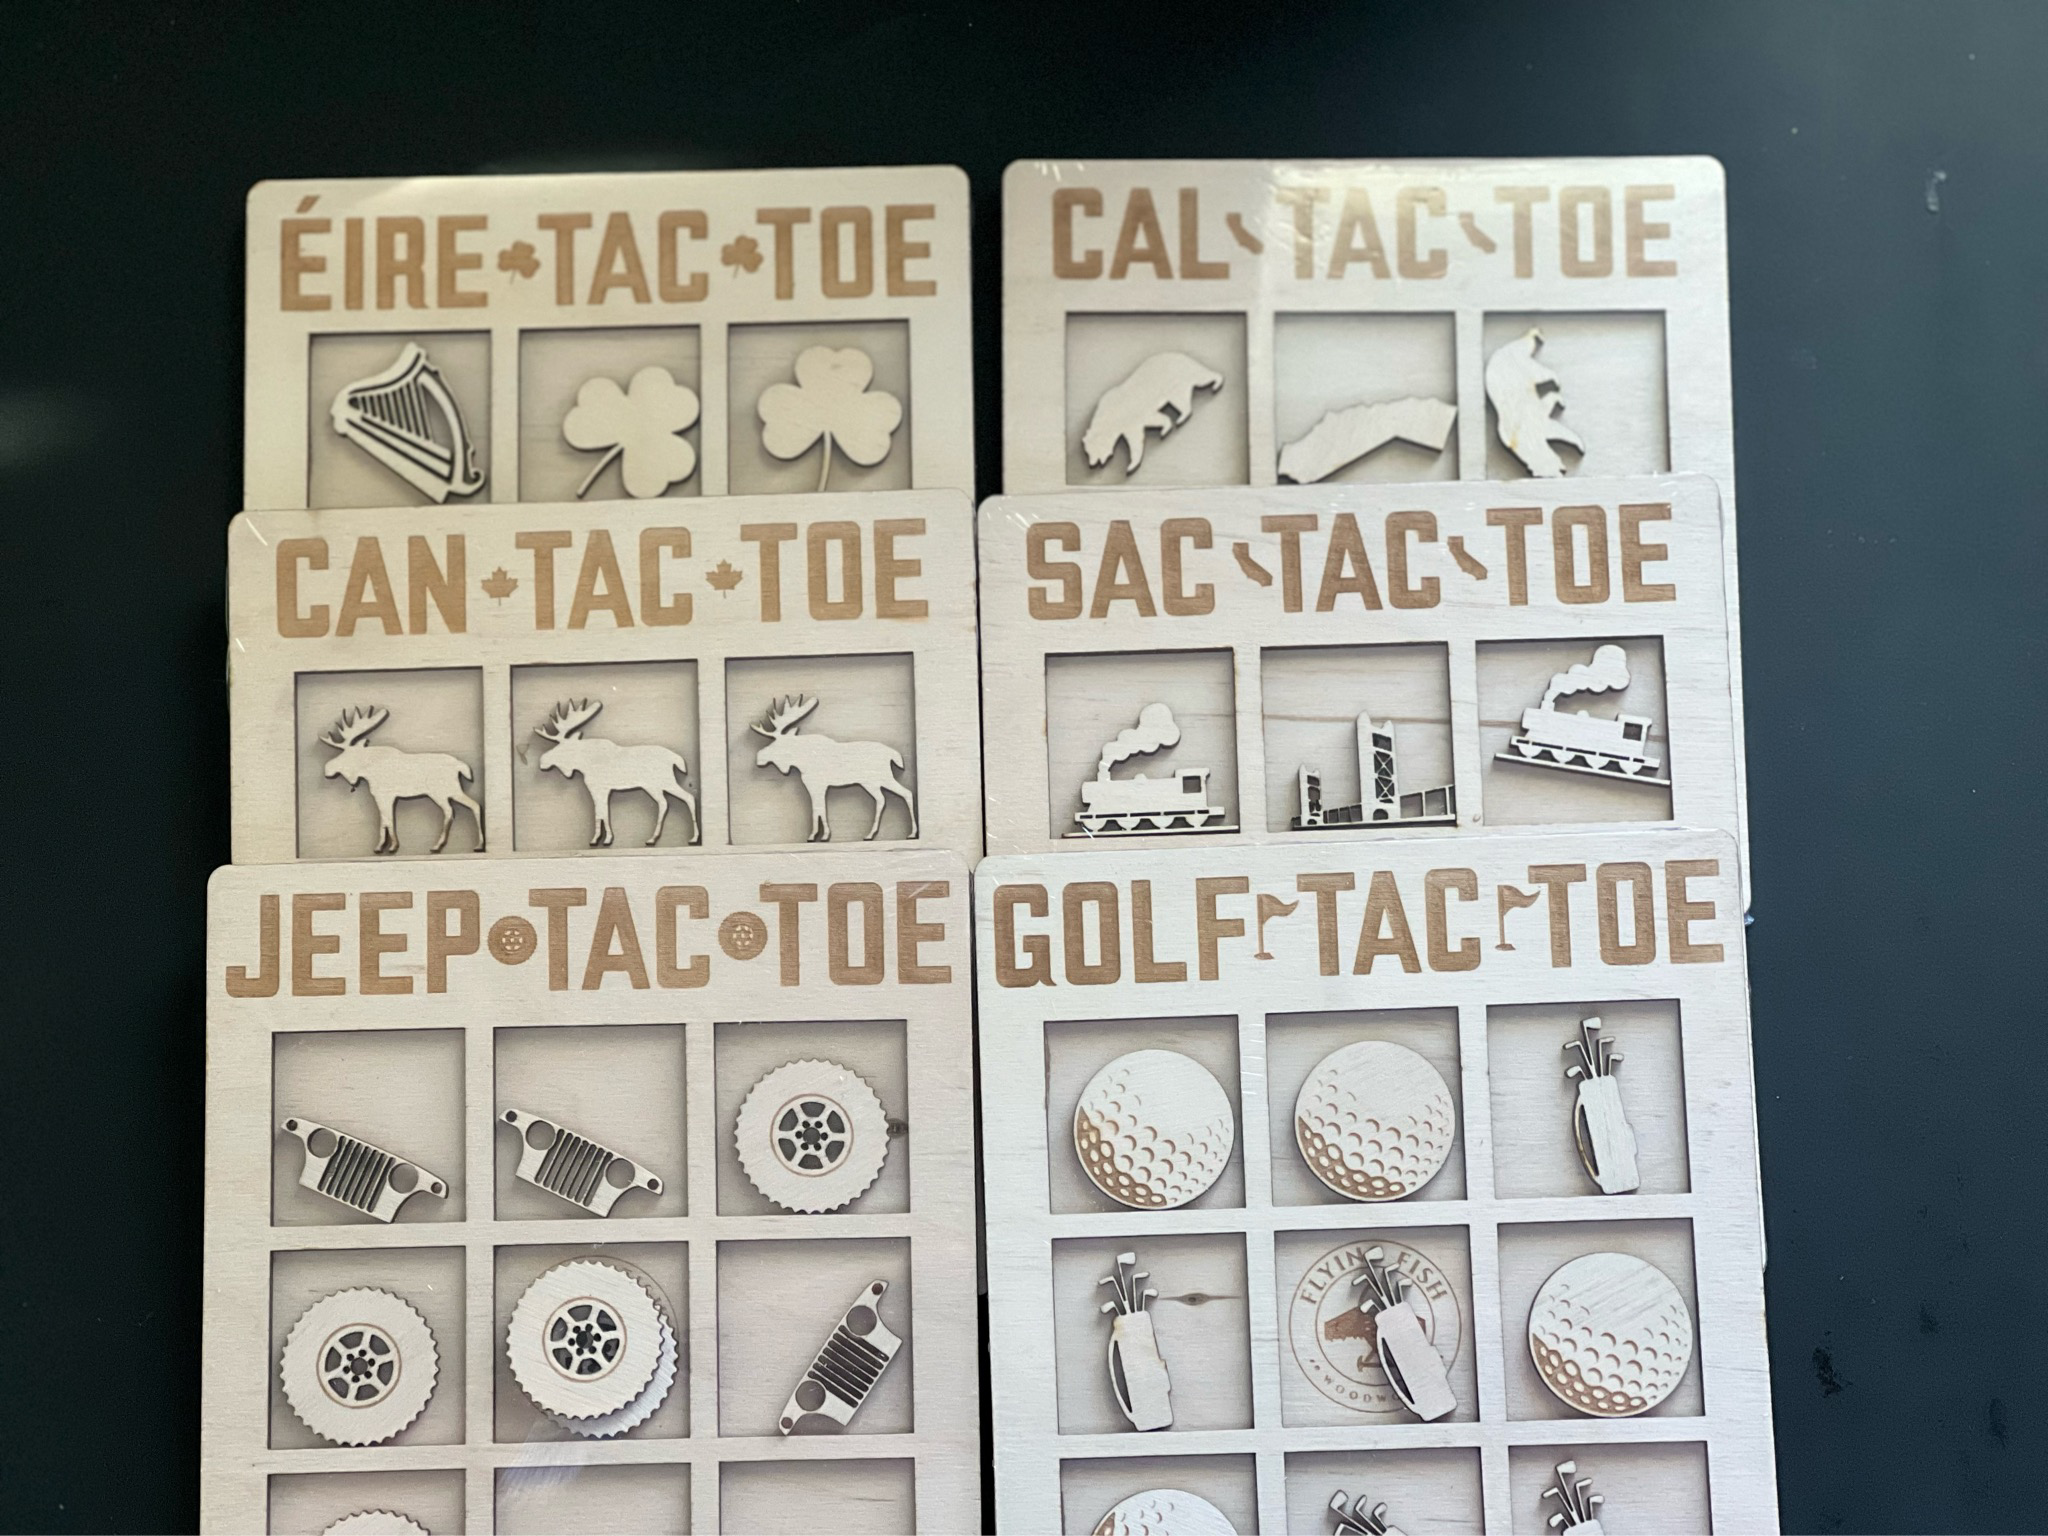 Custom Tic Tac Toe Board Game – LeeMo Designs